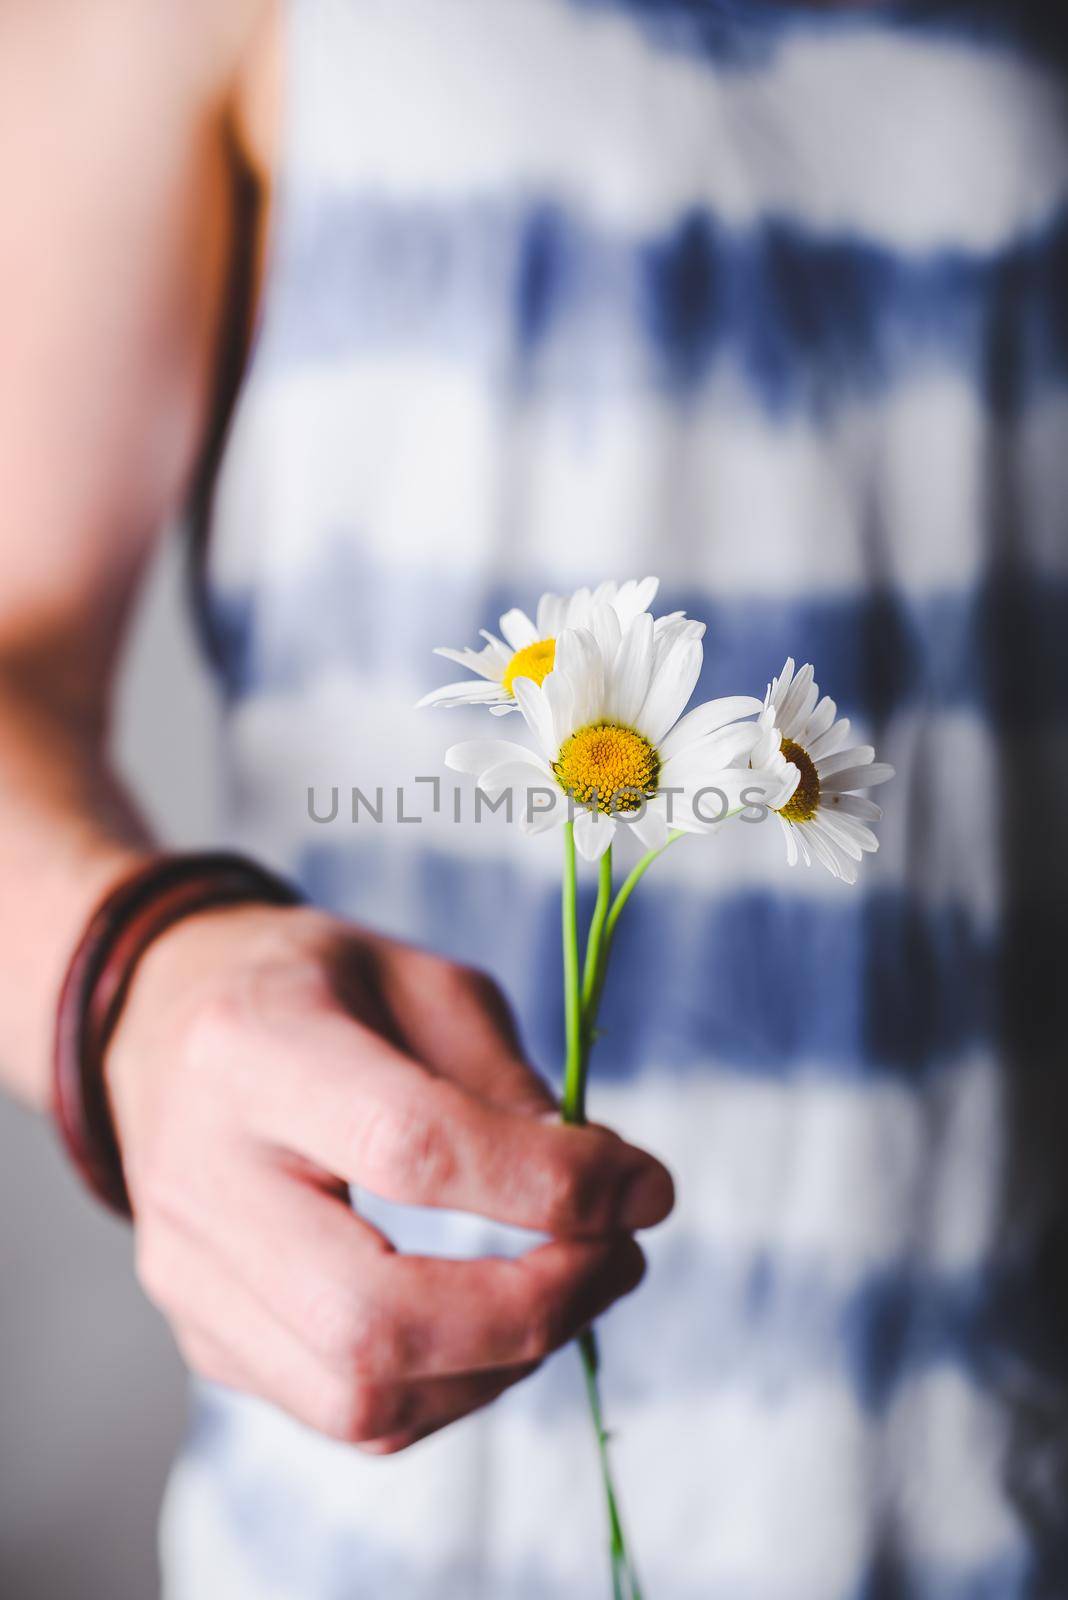 Chamomile flowers in hands by Seva_blsv